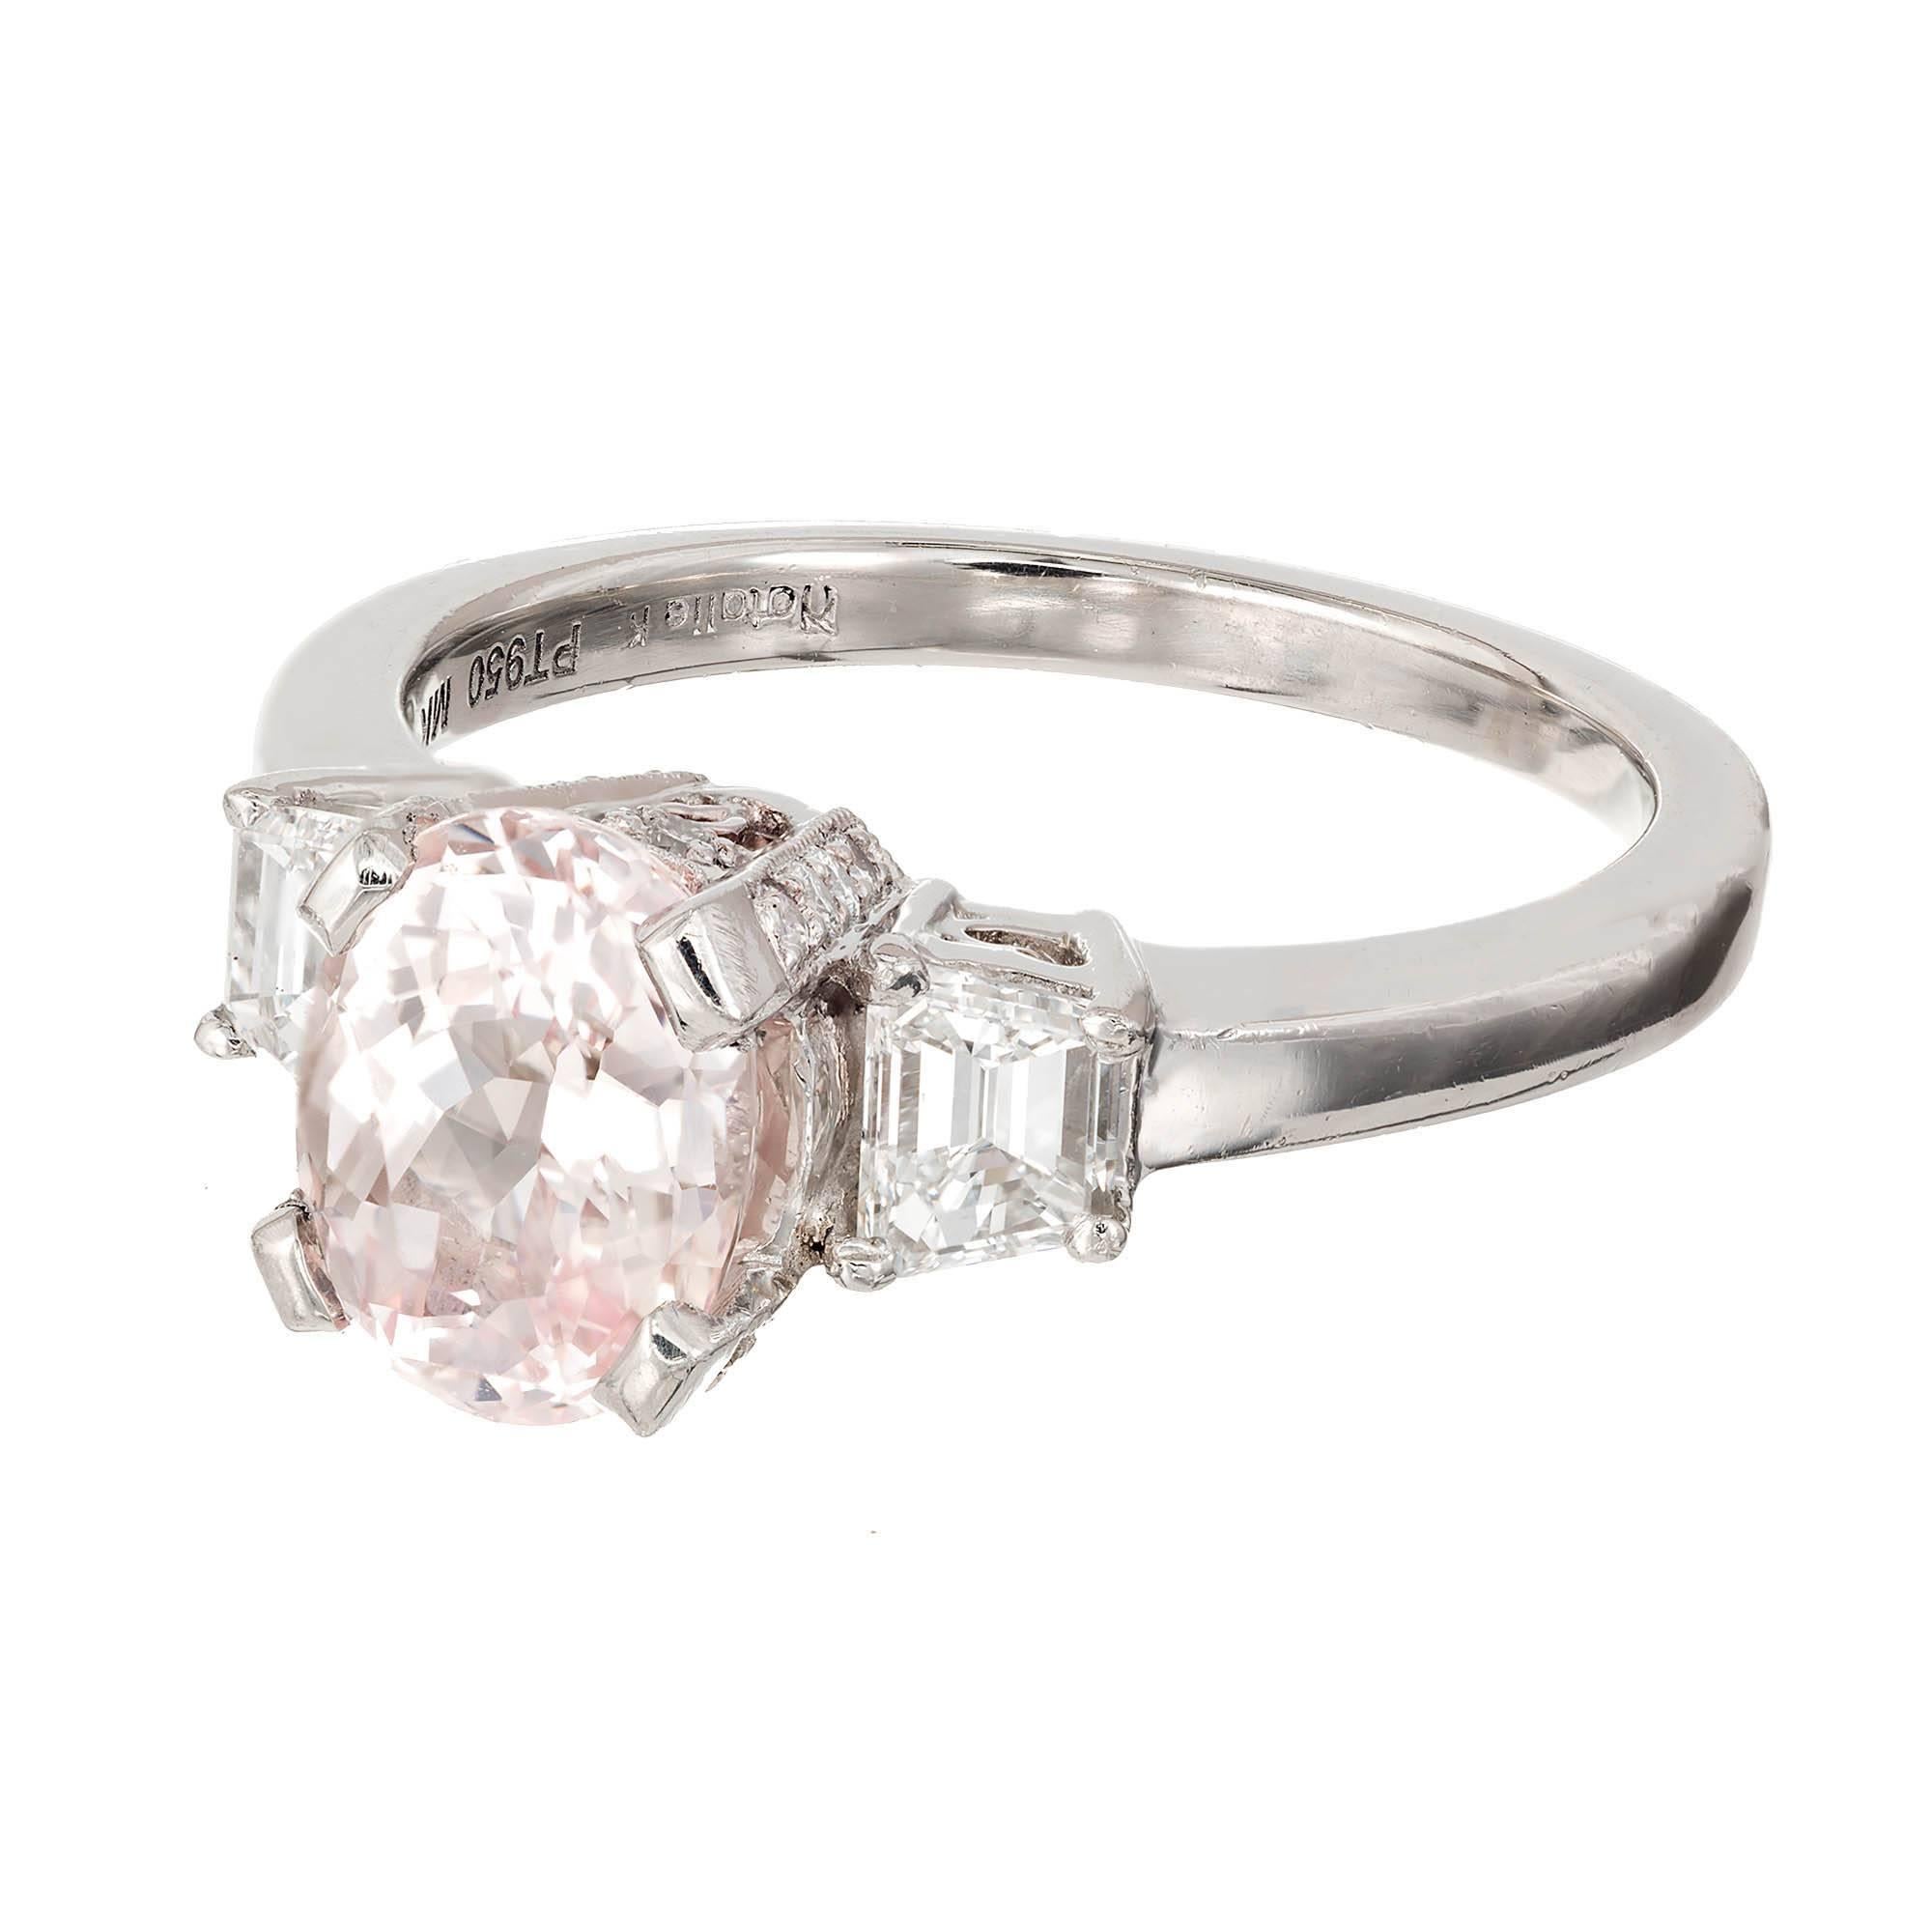 orange sapphire engagement ring